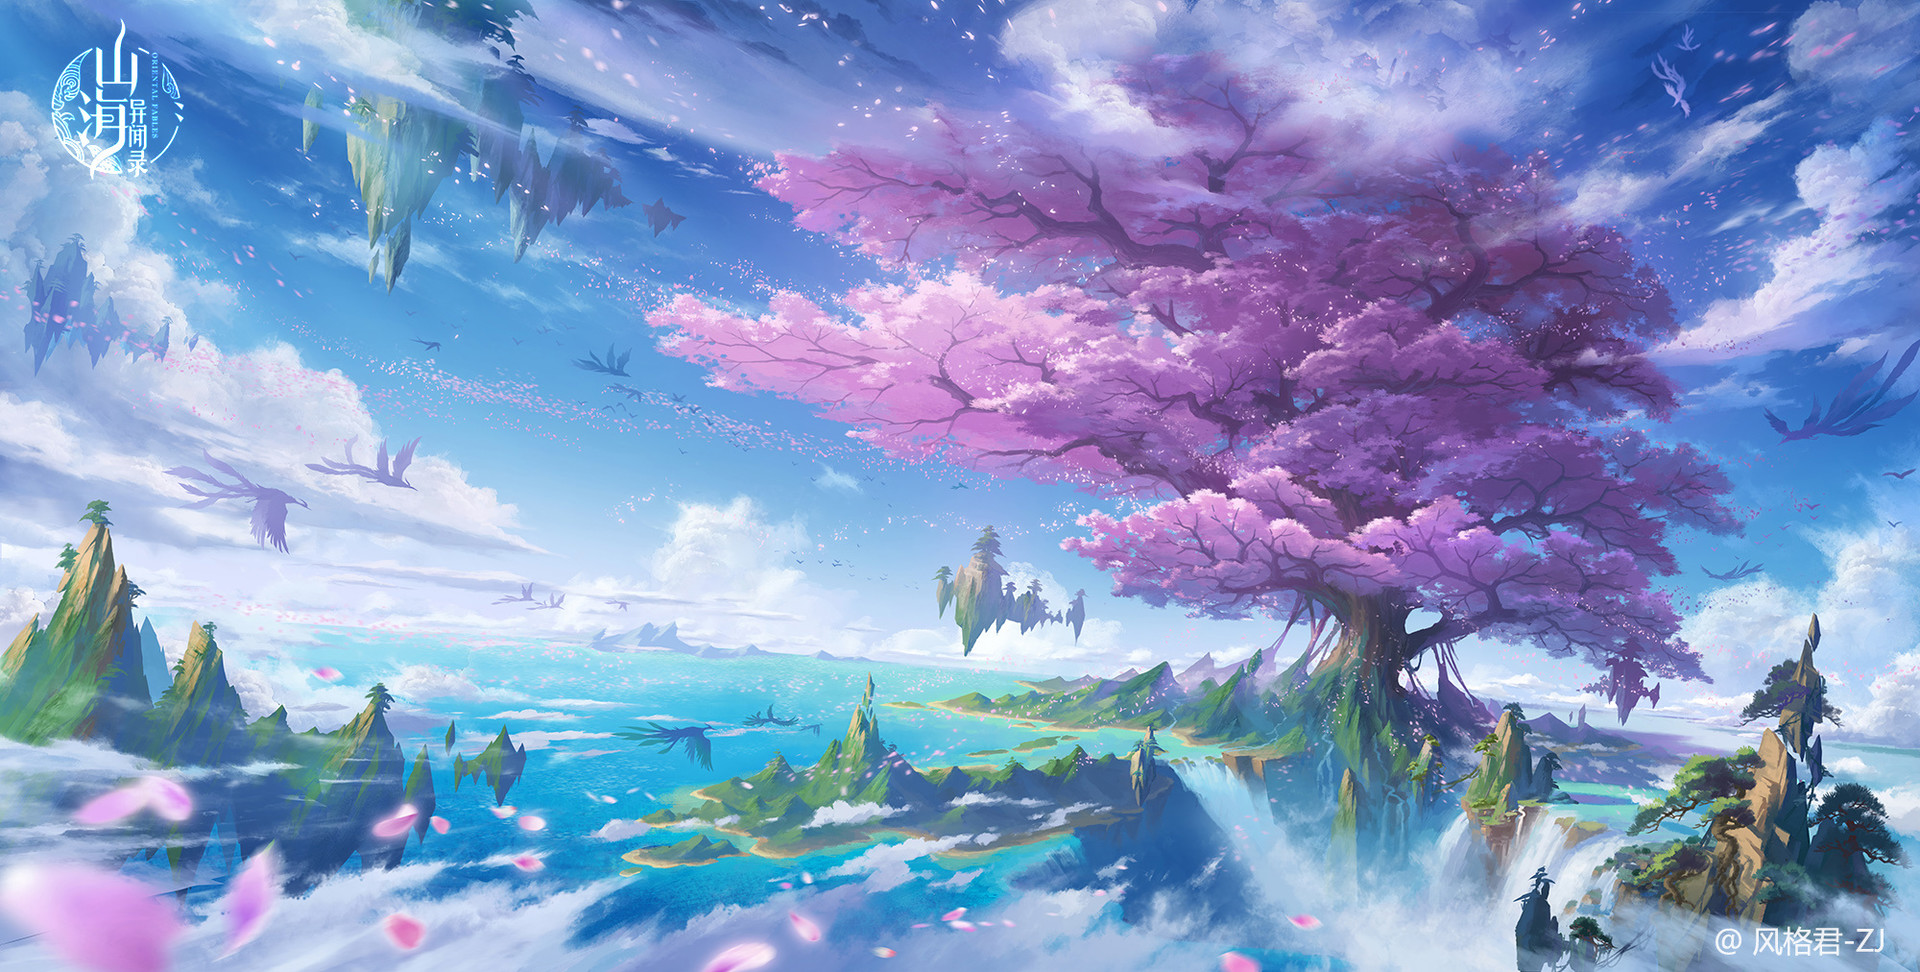 Jun Zhang Digital Art Fantasy Art Cherry Blossom Dragon Waterfall Landscape Clouds 1920x972